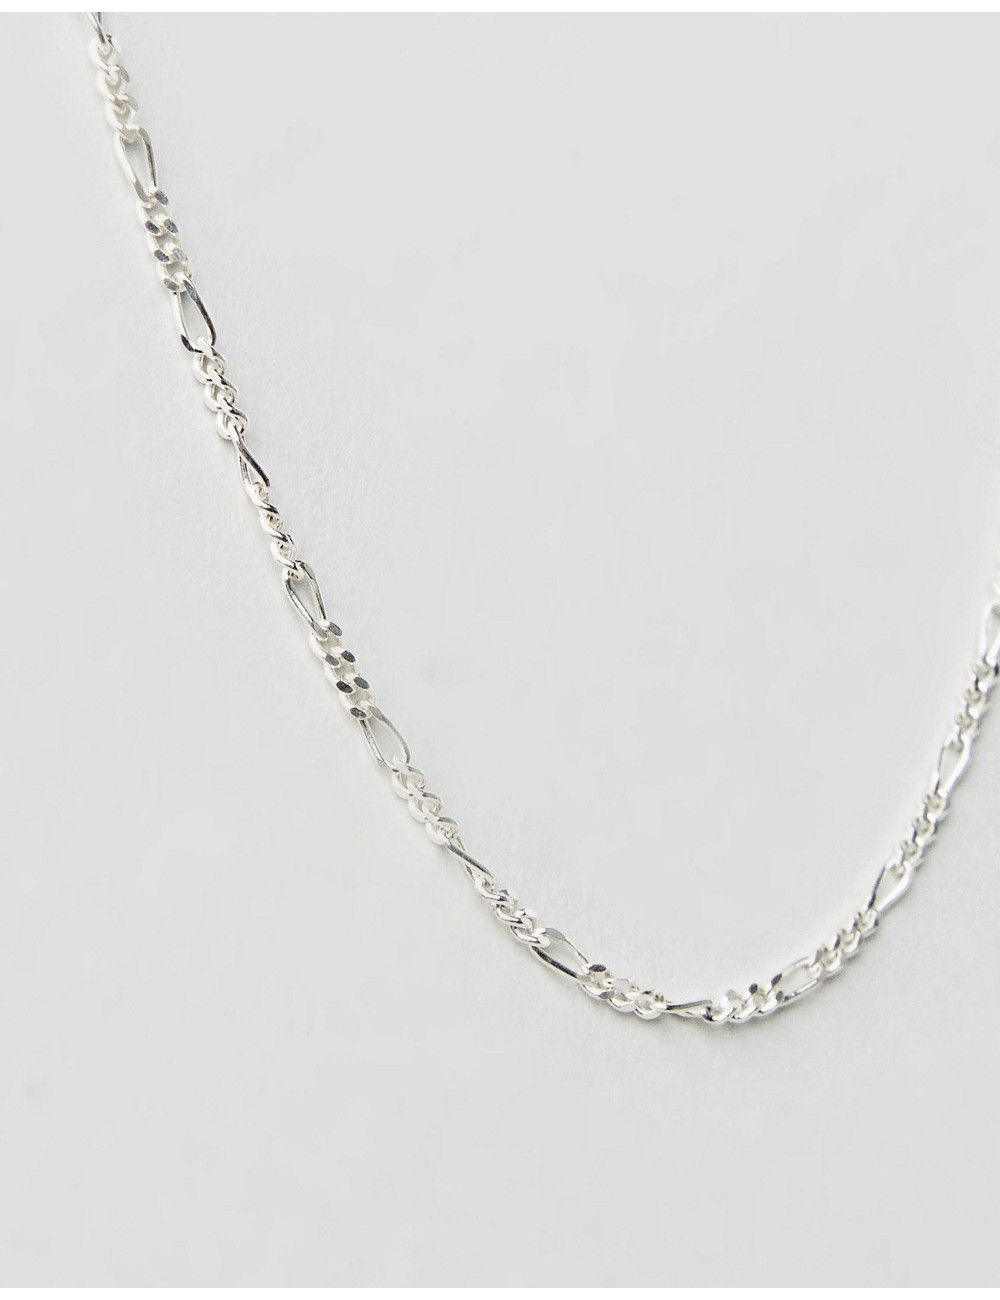 DesignB chain necklace in...